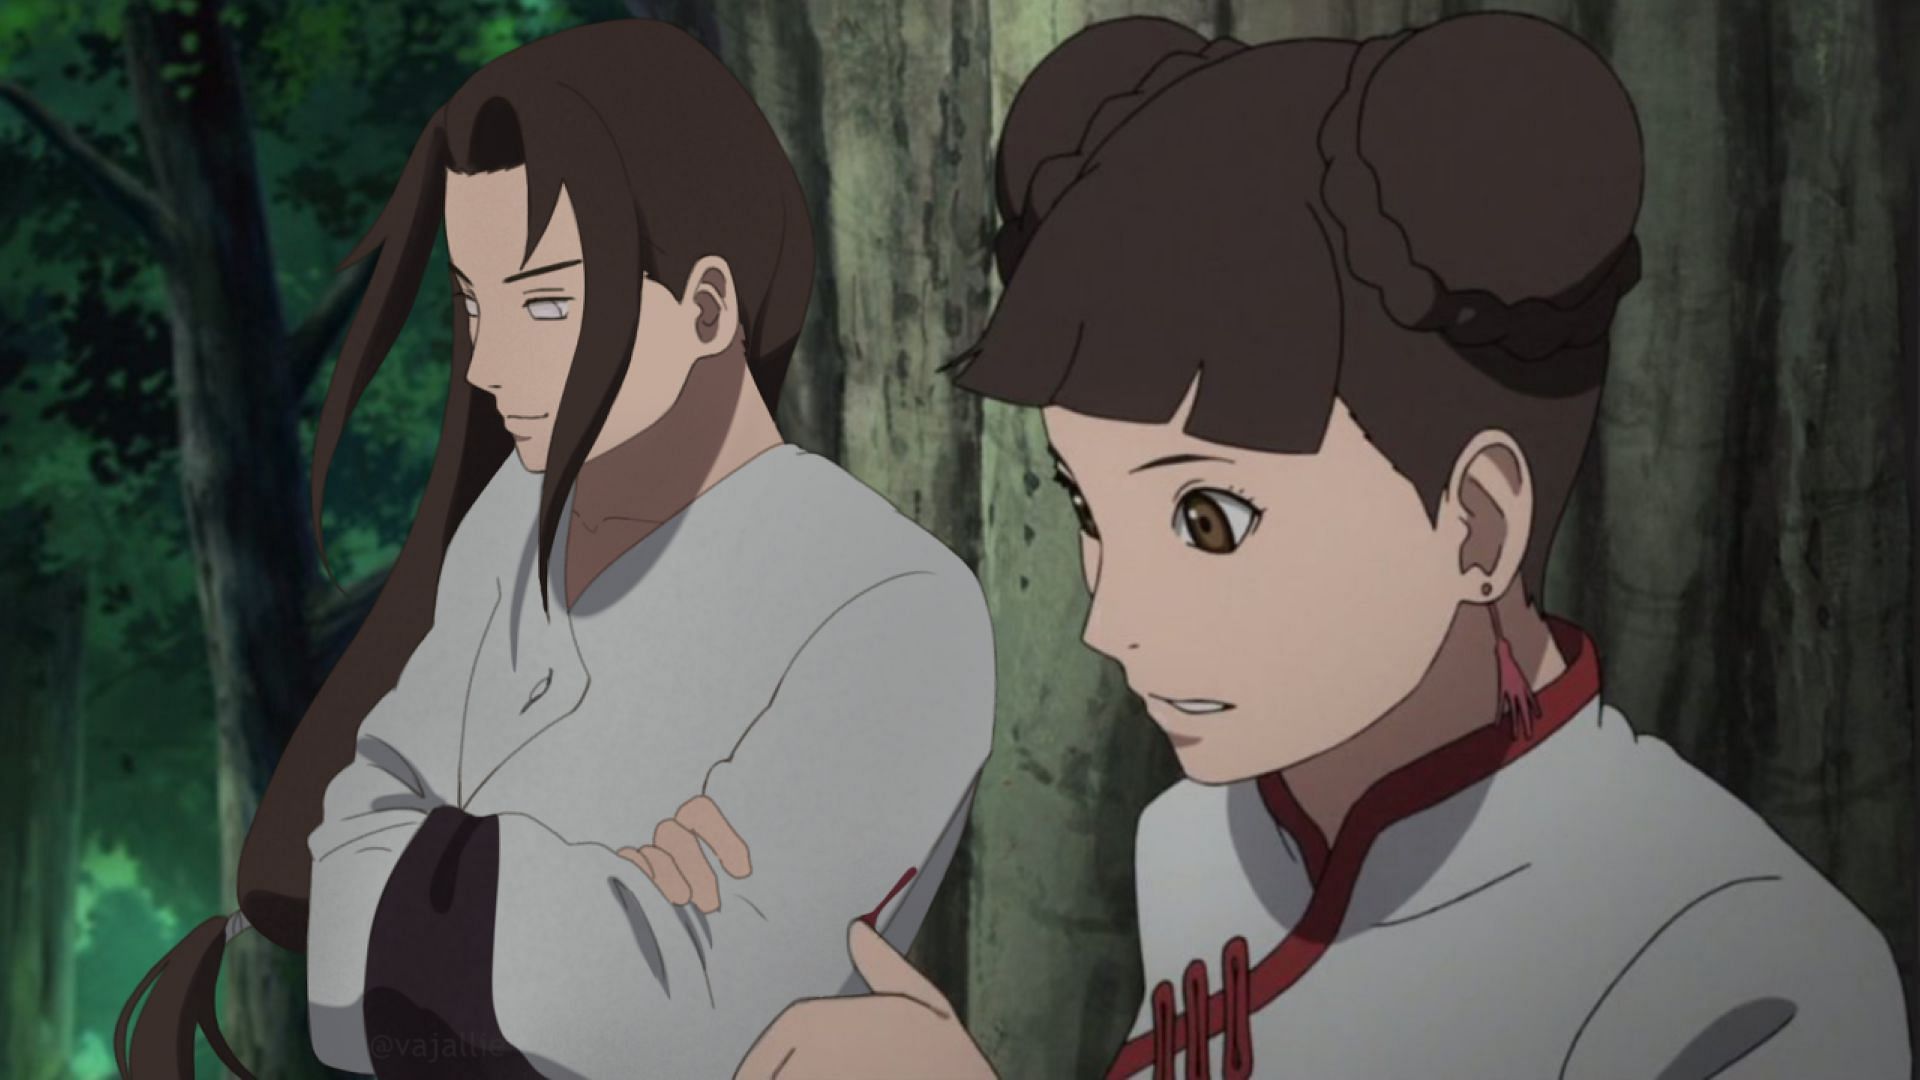 Tenten and Neji as seen in Naruto (Image via Studio Pierrot)